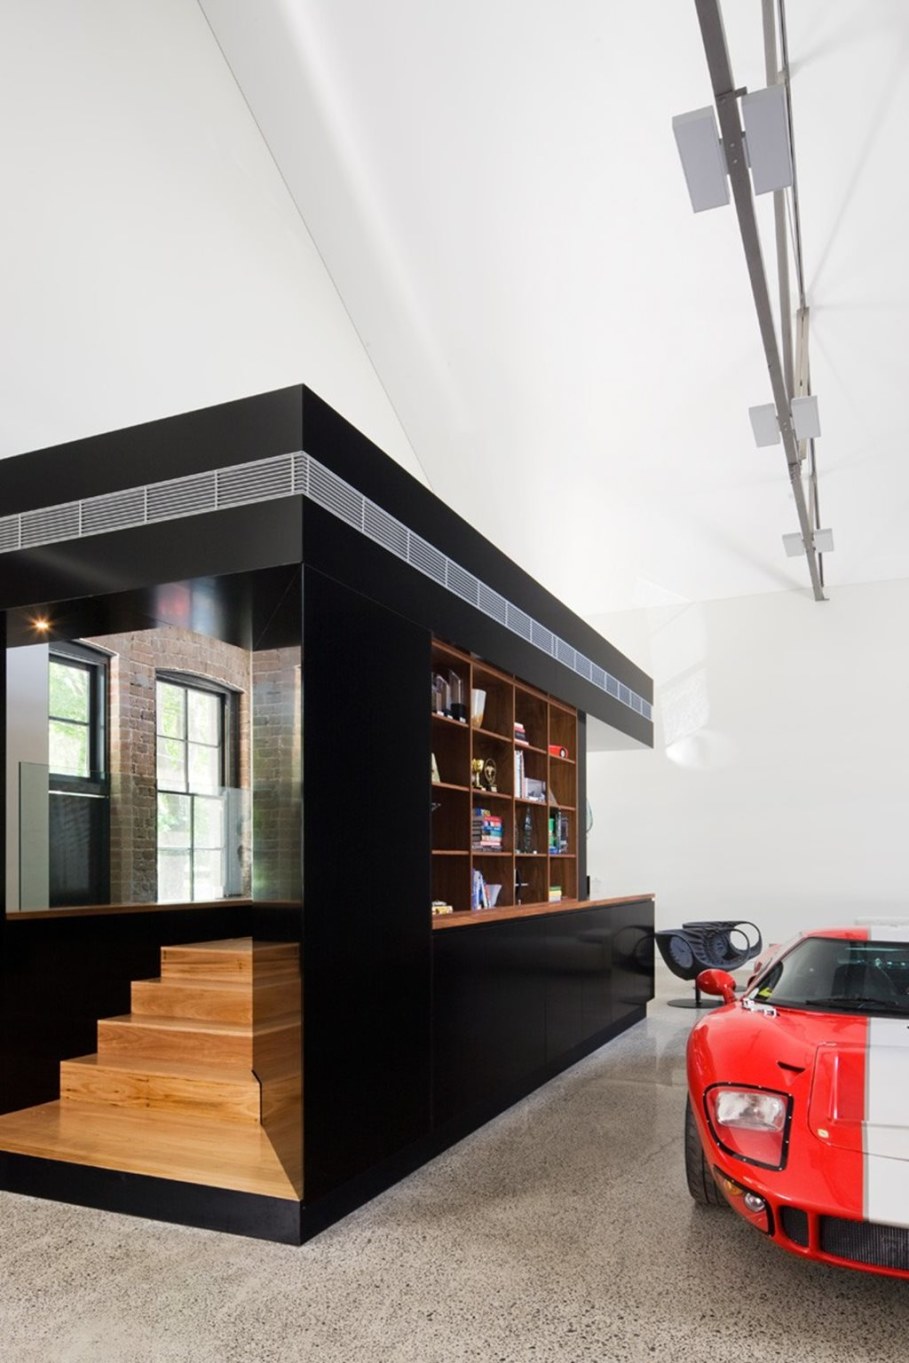 Grand loft house in Australia by Corben Architects studio - Living room 4